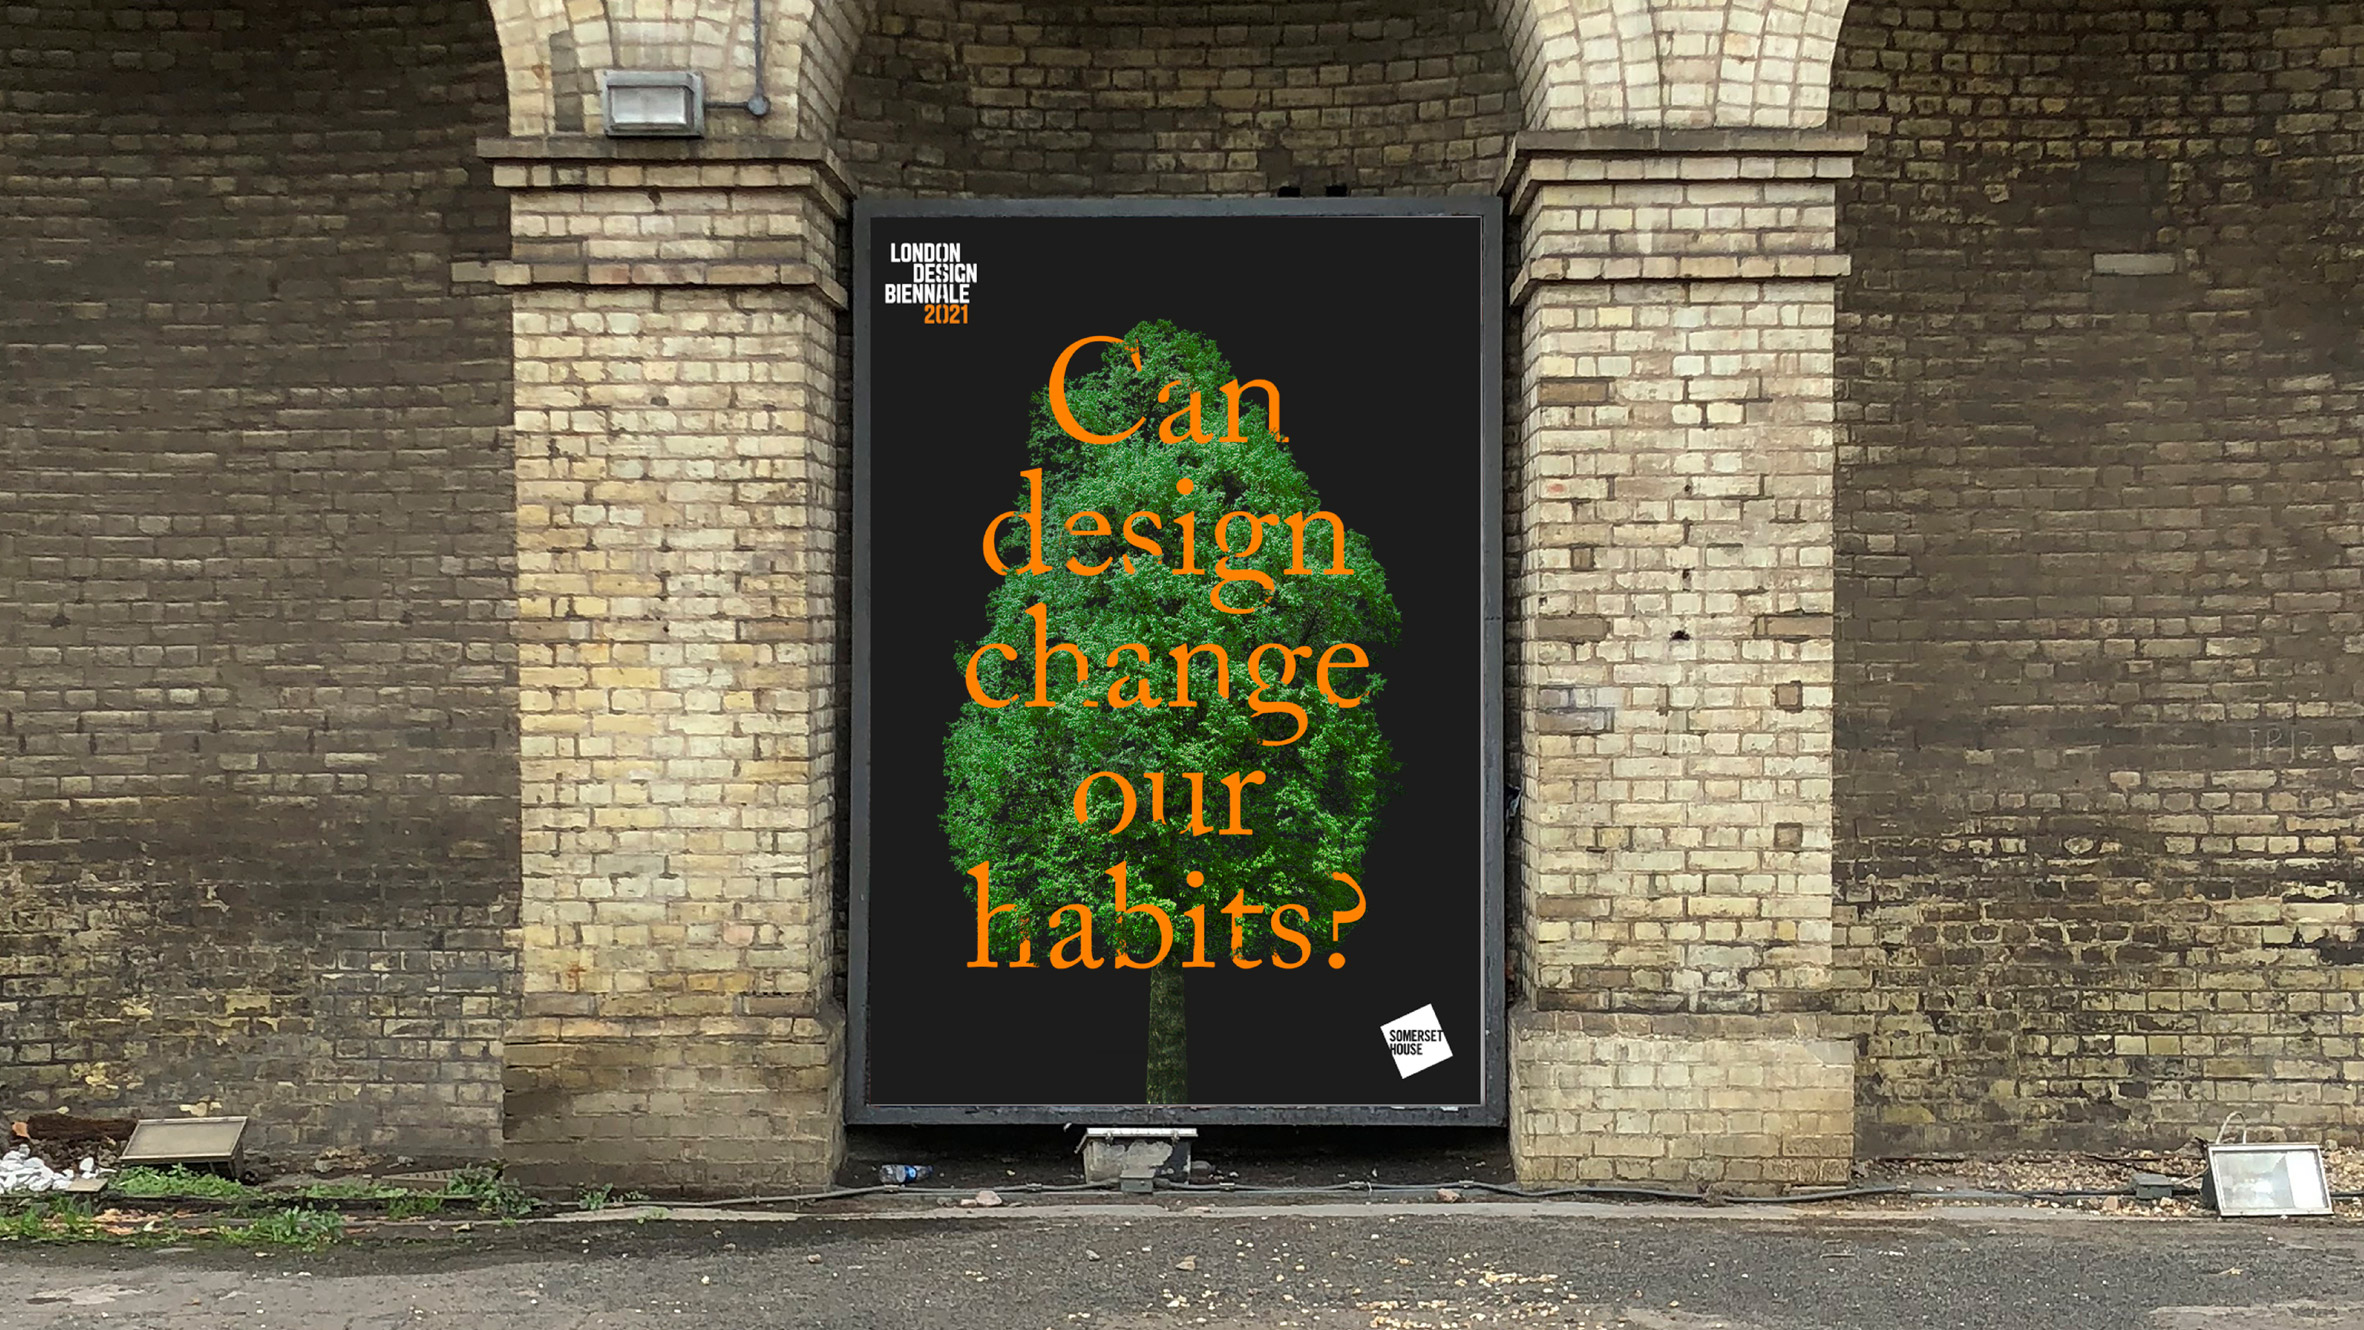 Pentagram identity for London Design Biennale 2021 based on Es Devlin's Forest for Change installation